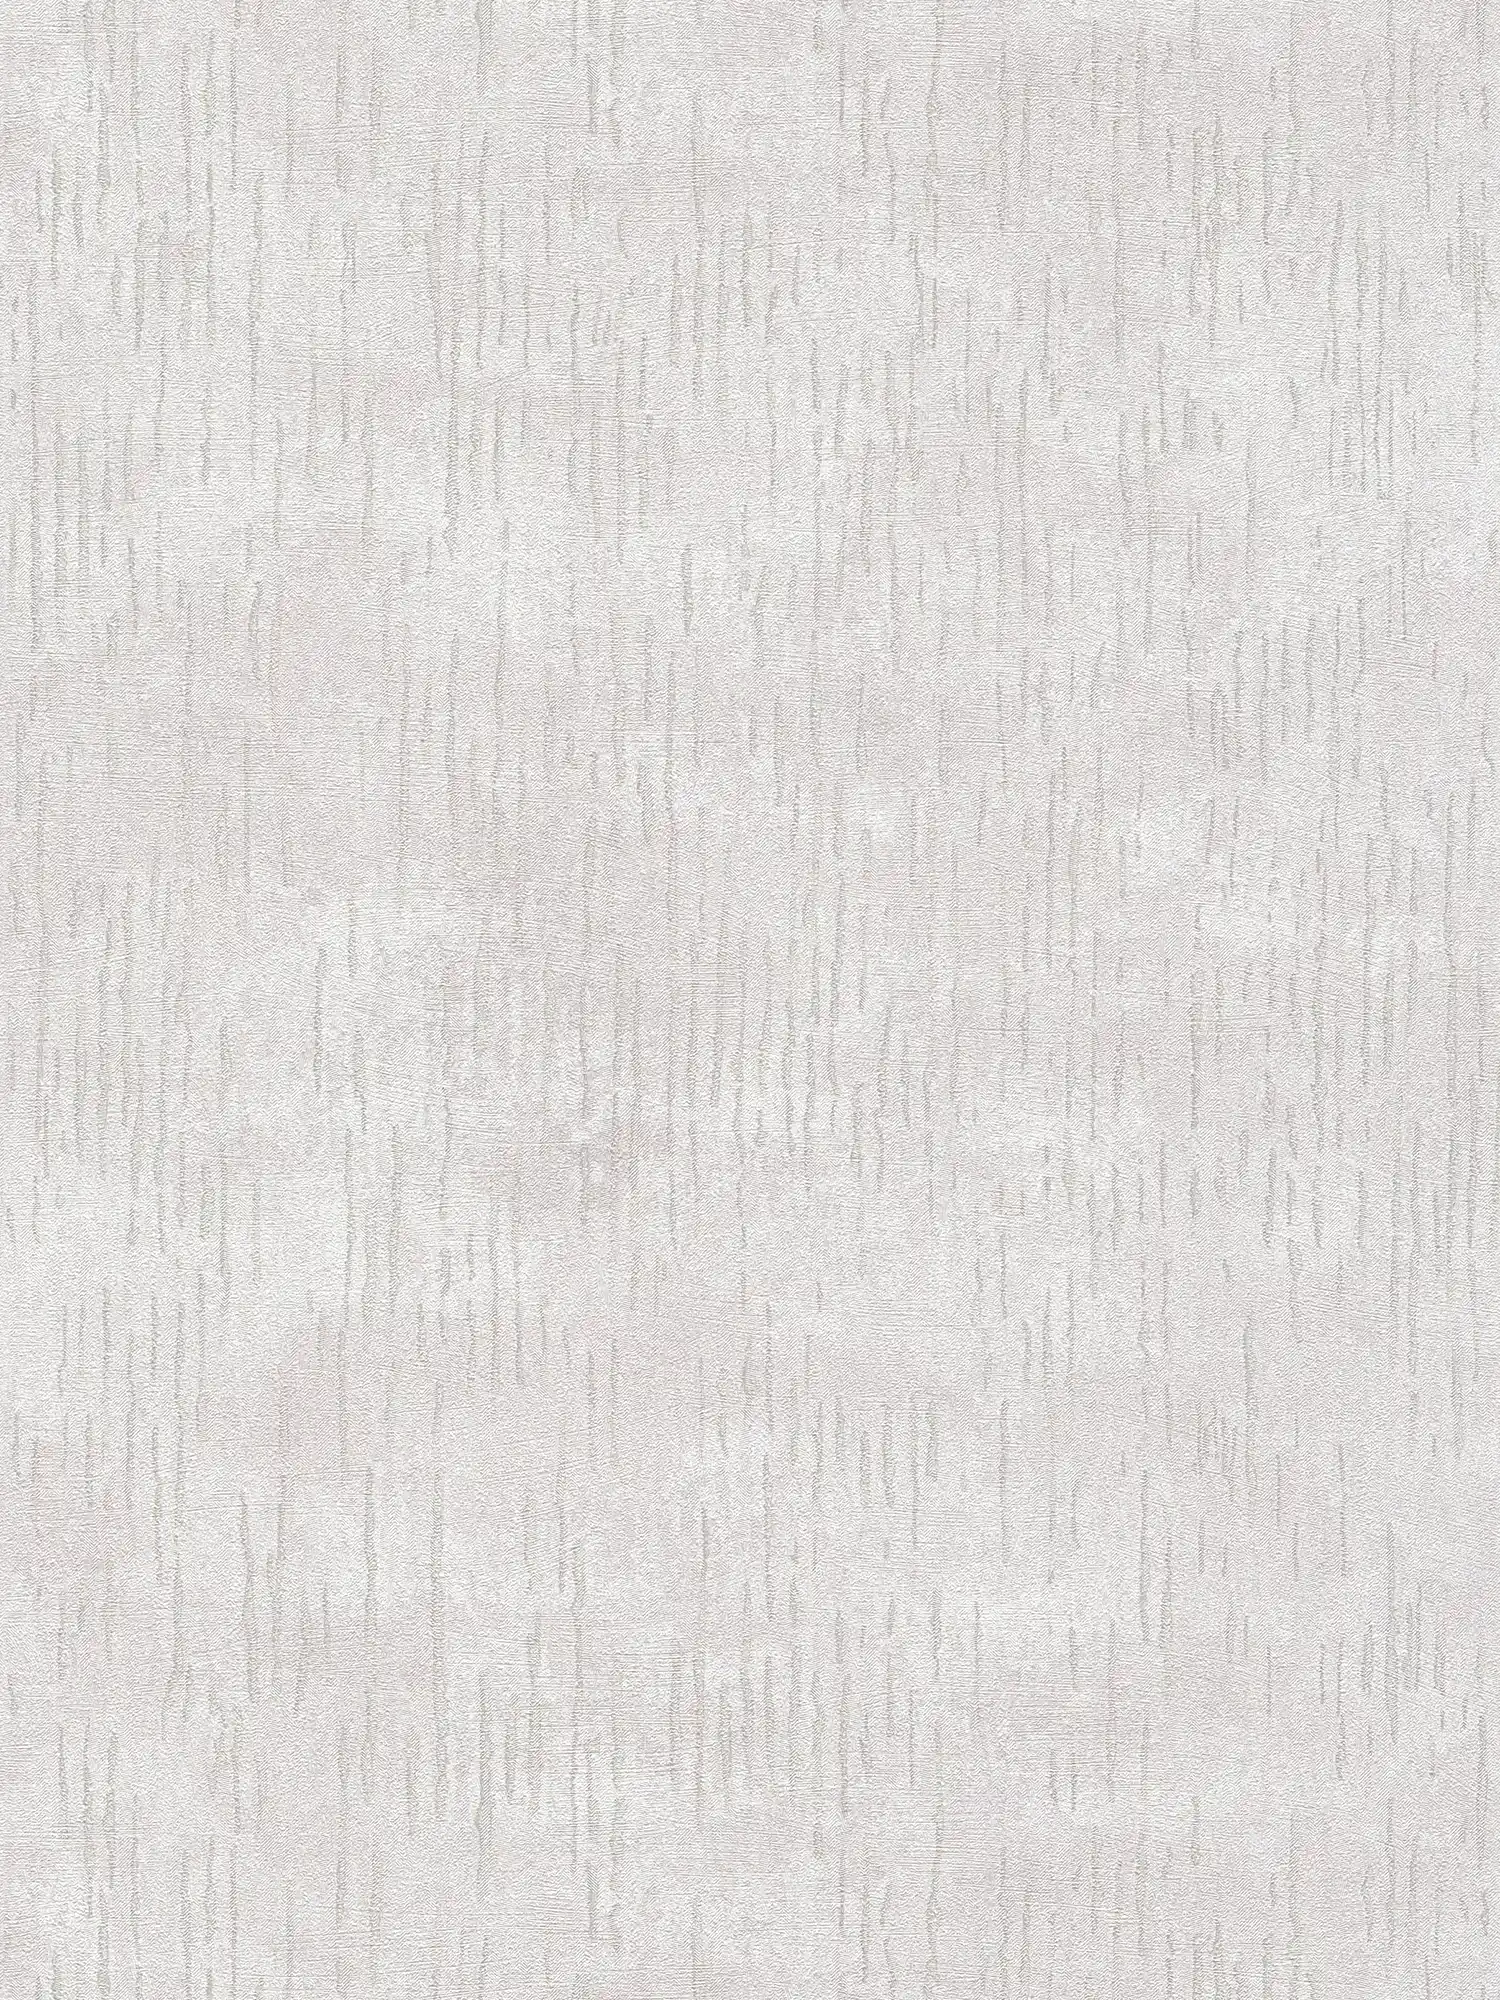 Glossy texture wallpaper with metallic pattern - beige, cream, metallic
